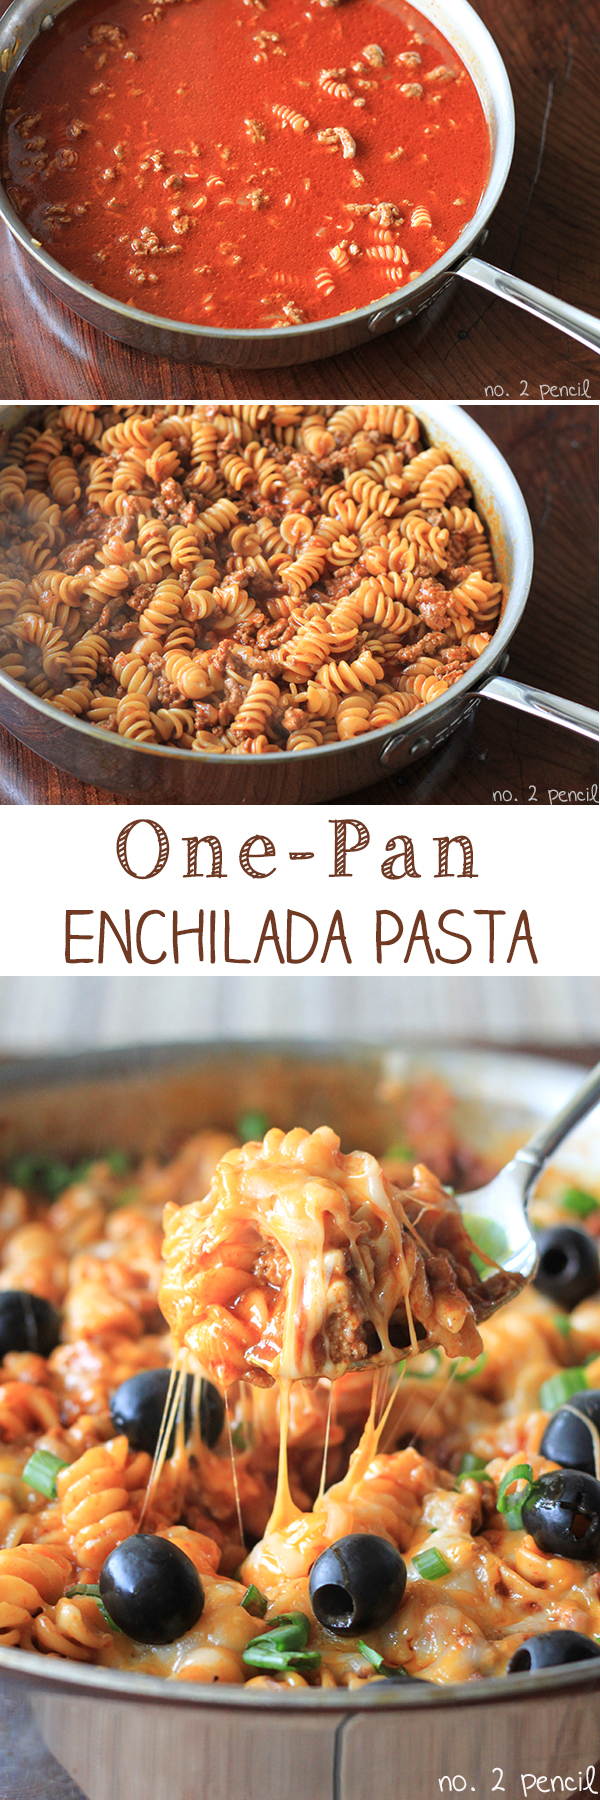 One-Pan Enchilada Pasta 